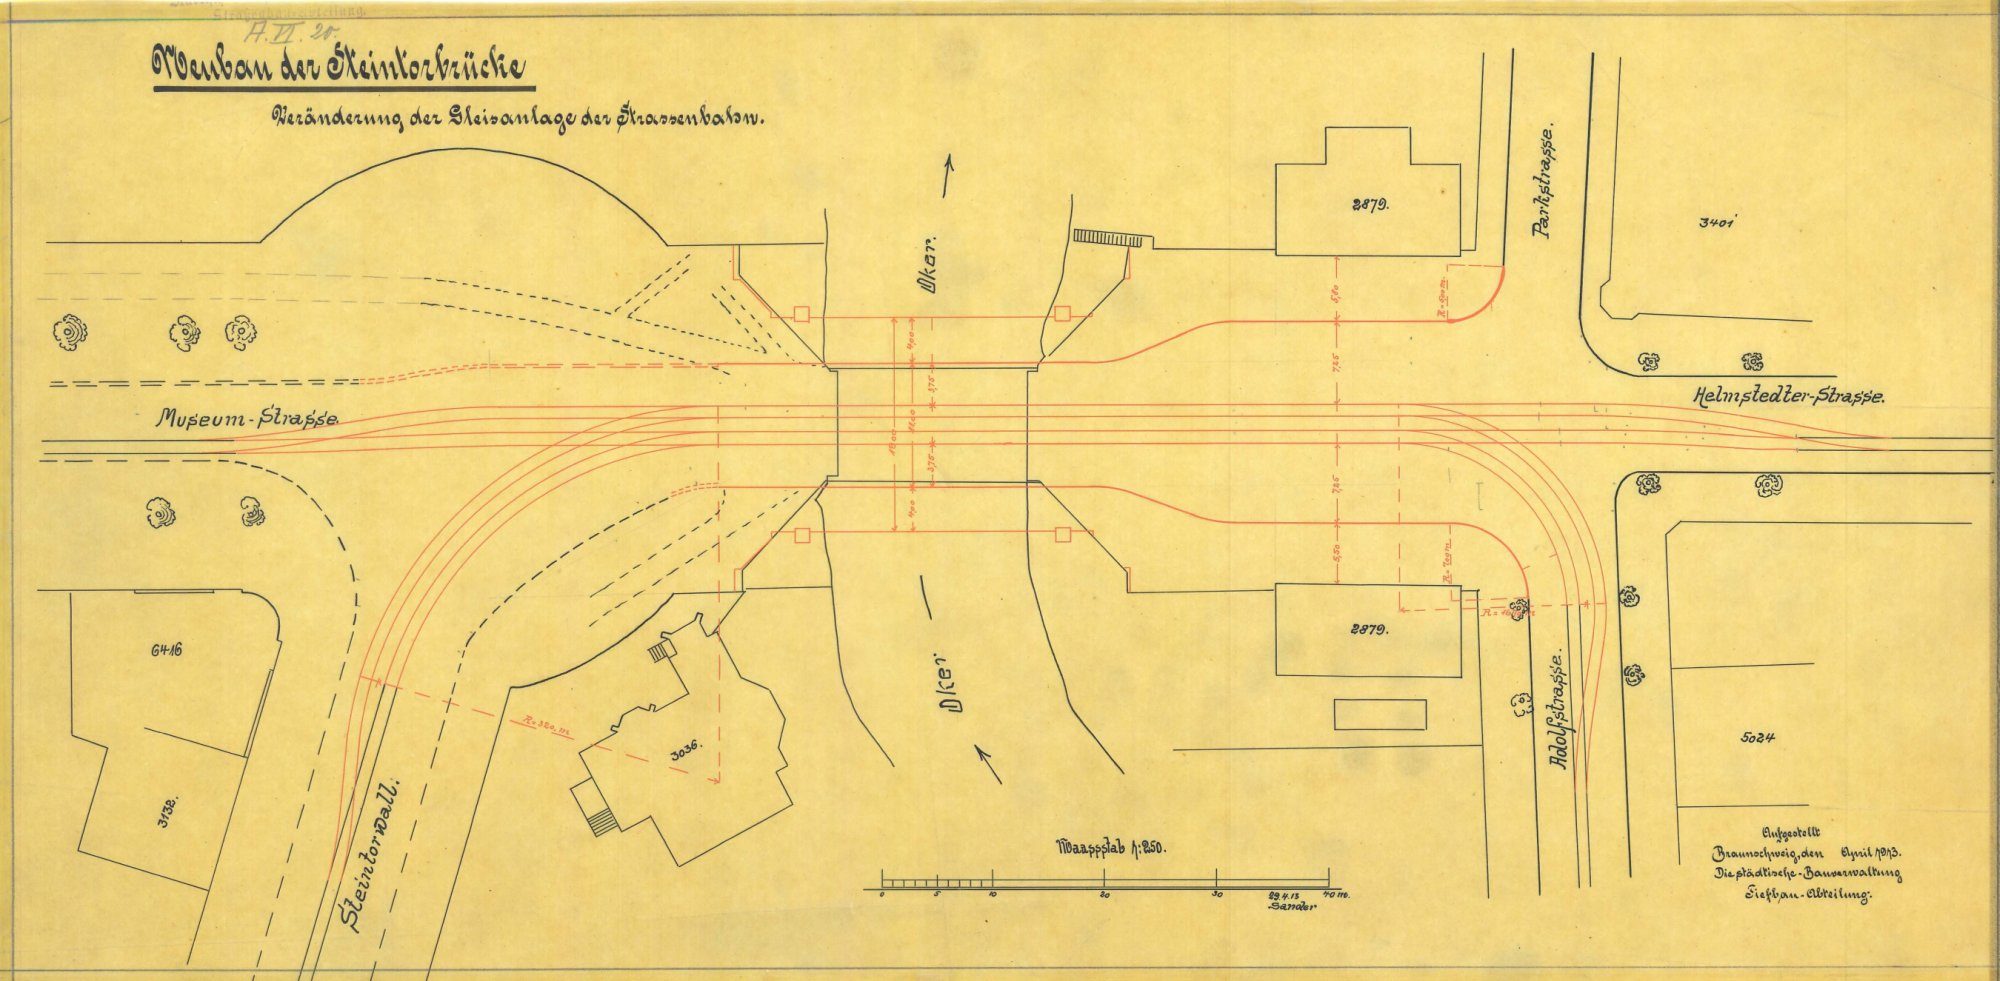 Steintorbrücke, Straßenbahnplan, 1913